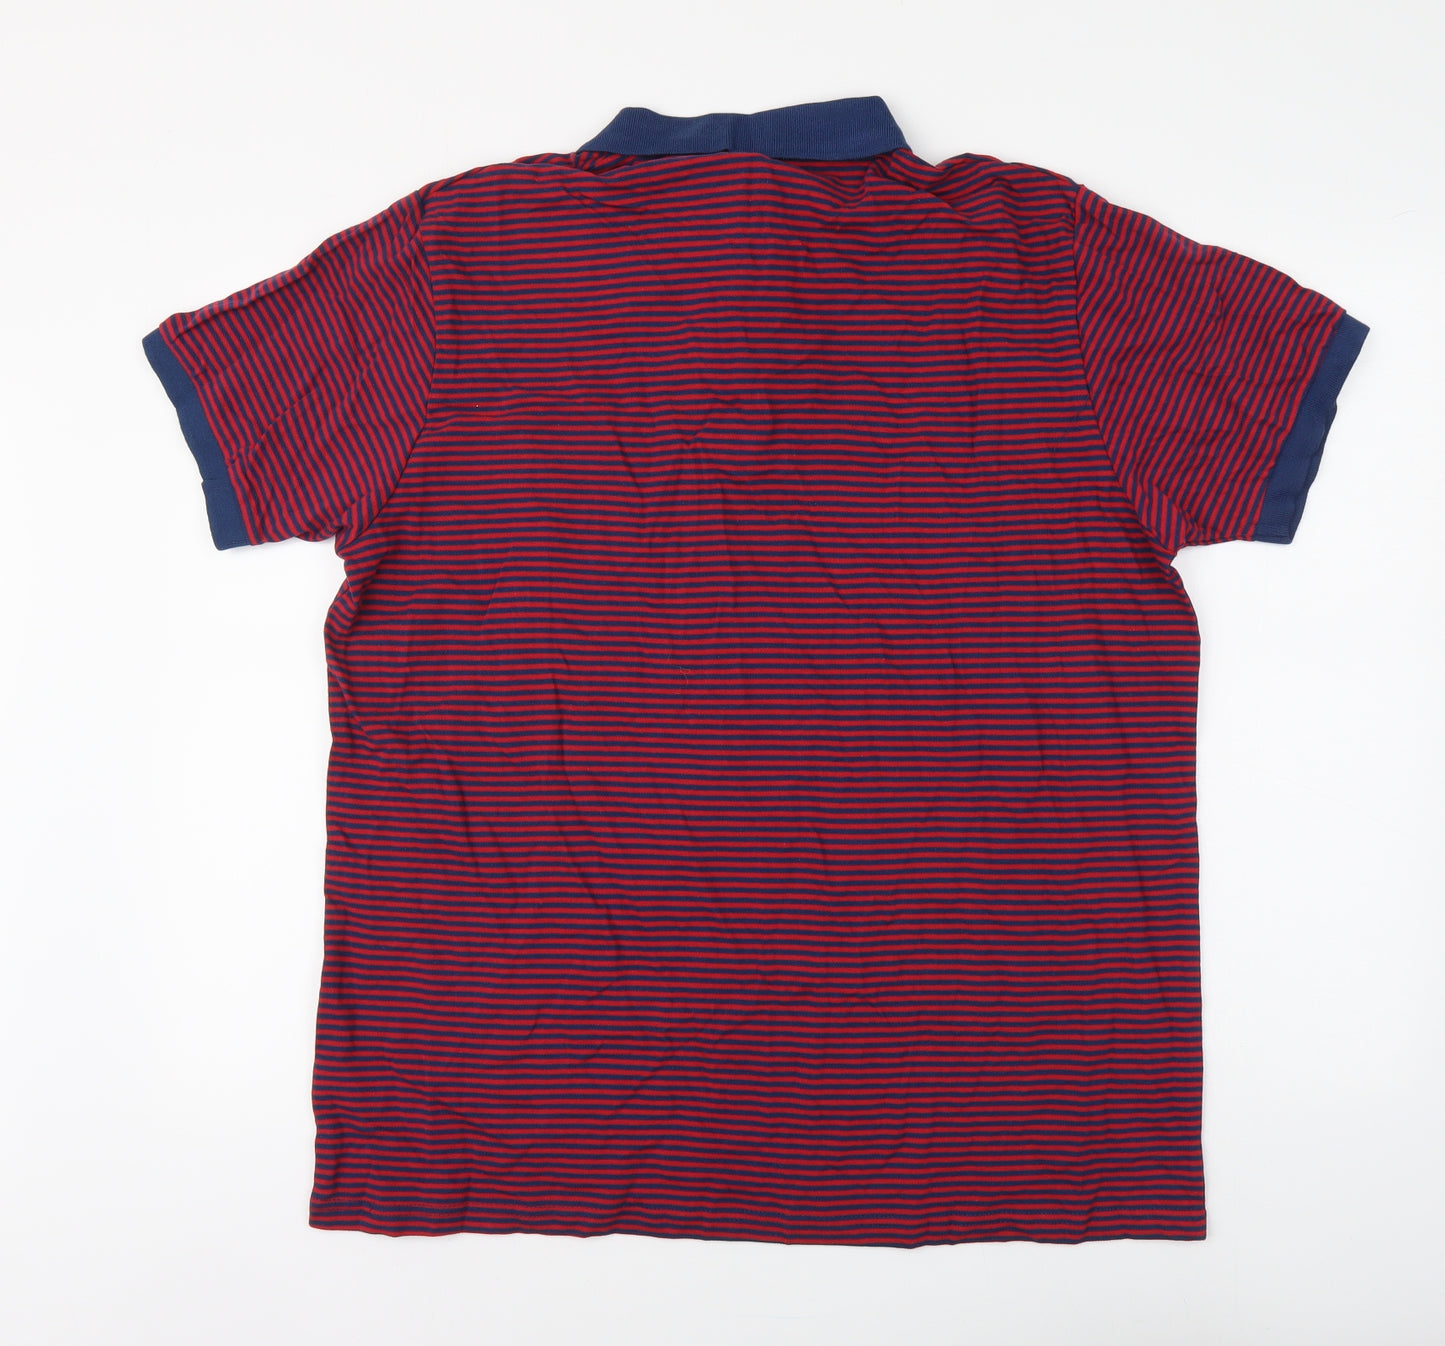 Primark Mens Red Striped Cotton Polo Size XL Collared Button